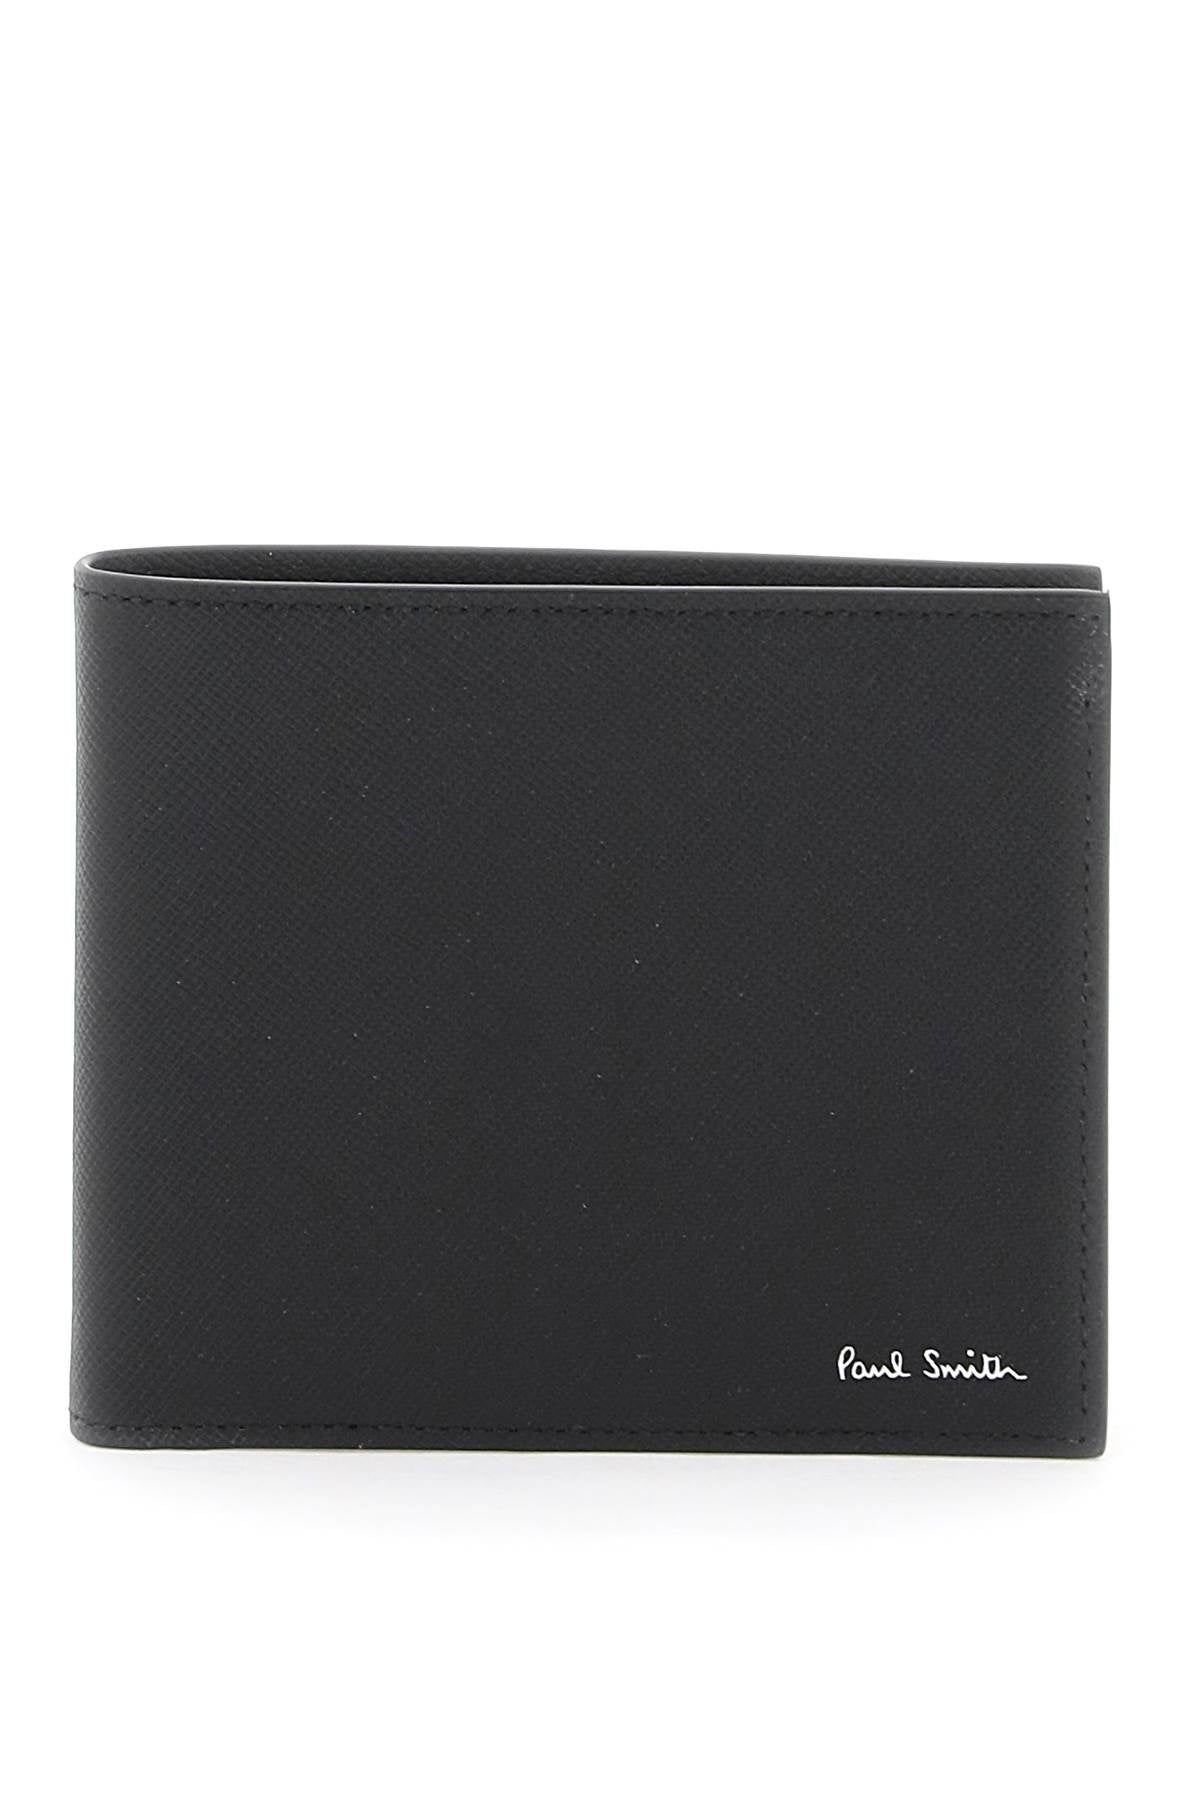 Paul smith mini blur wallet-0